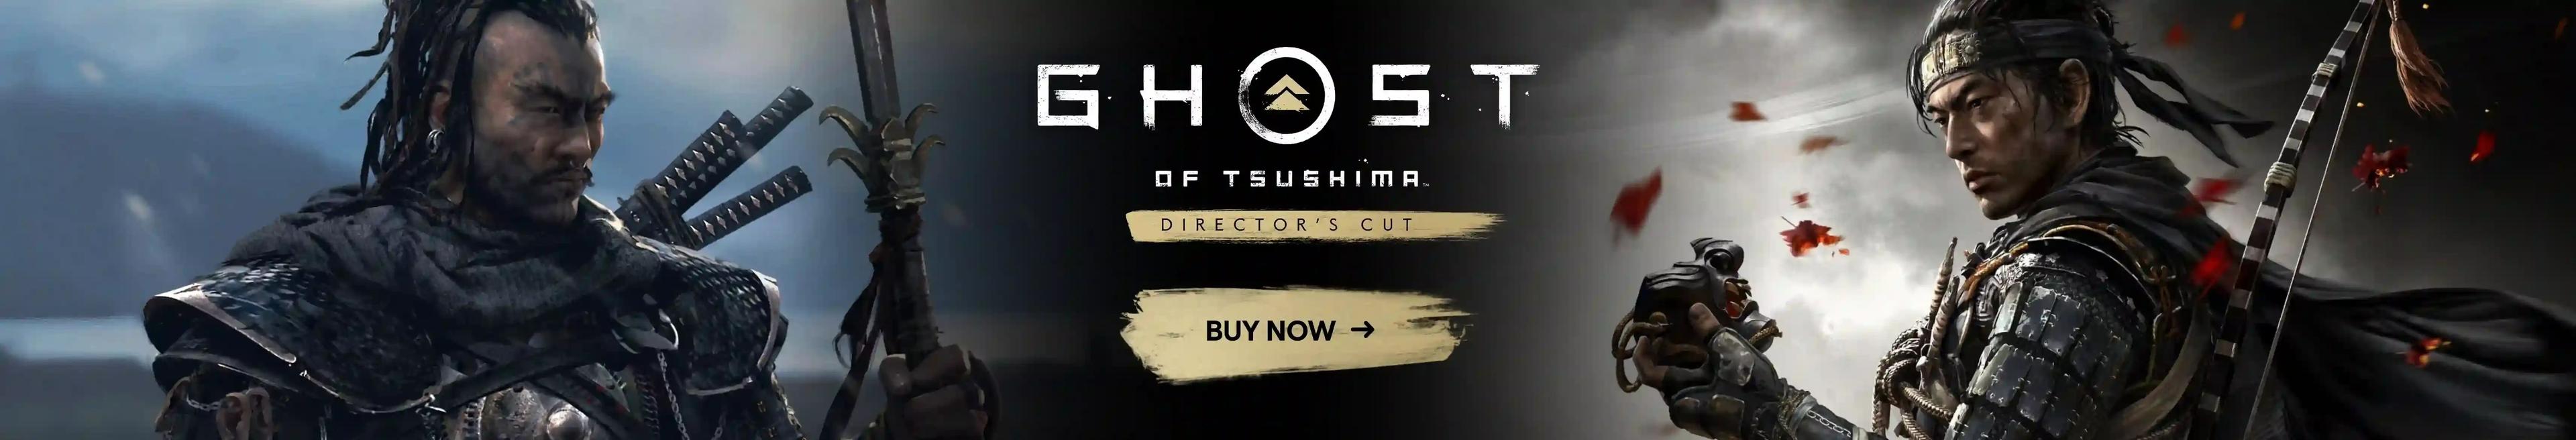 Ghost of Tsushima desktop